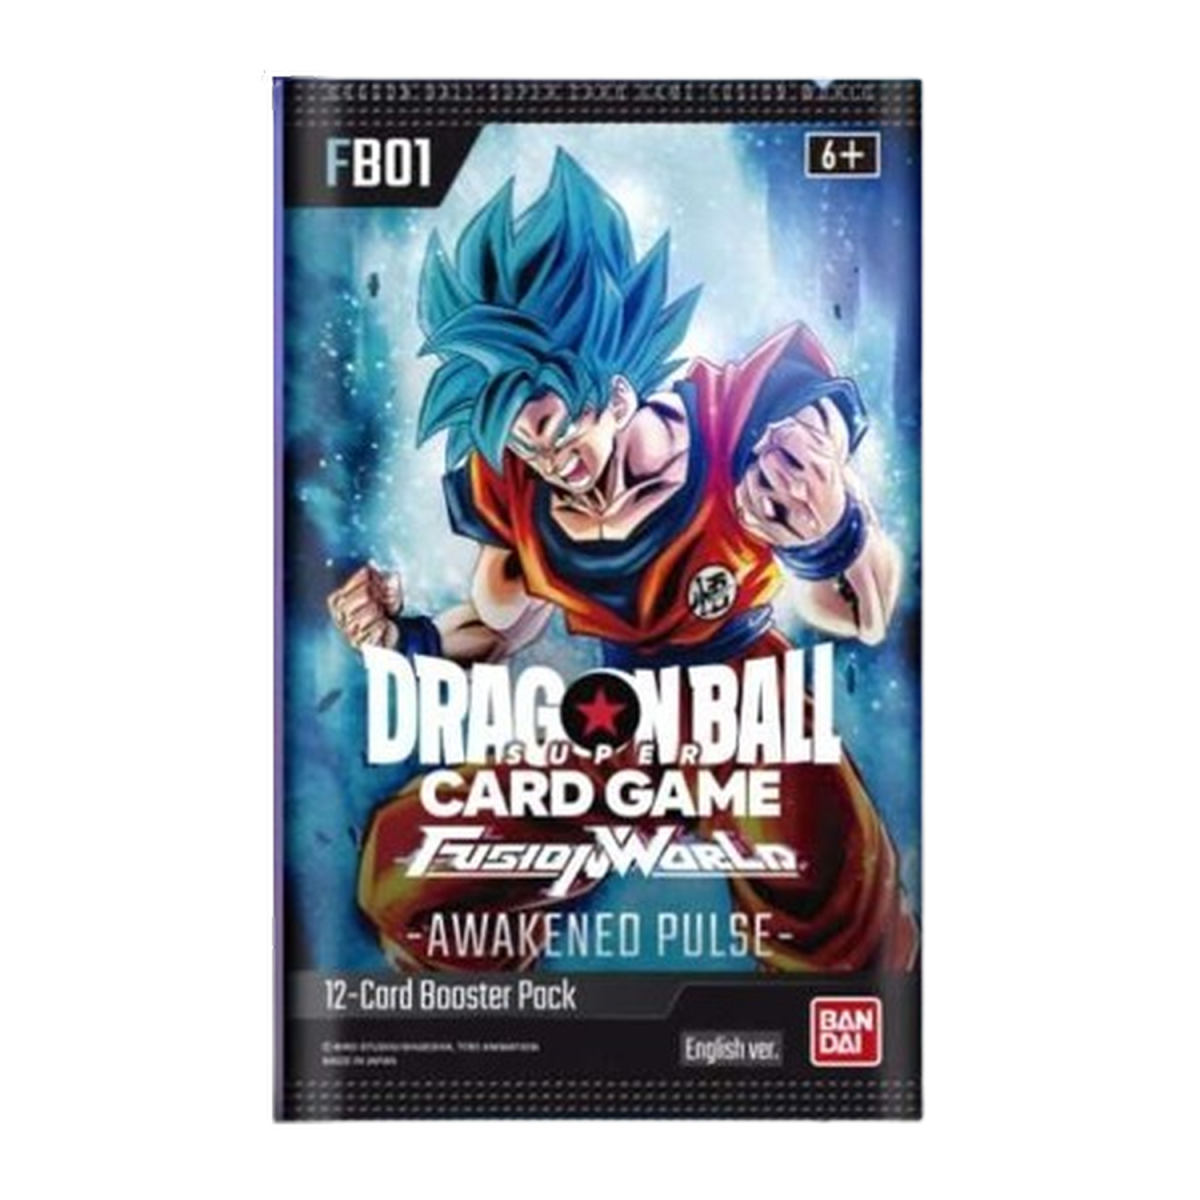 Dragon Ball CG Fusion World - Boosters - Awakened Pulse -  FB01 - EN